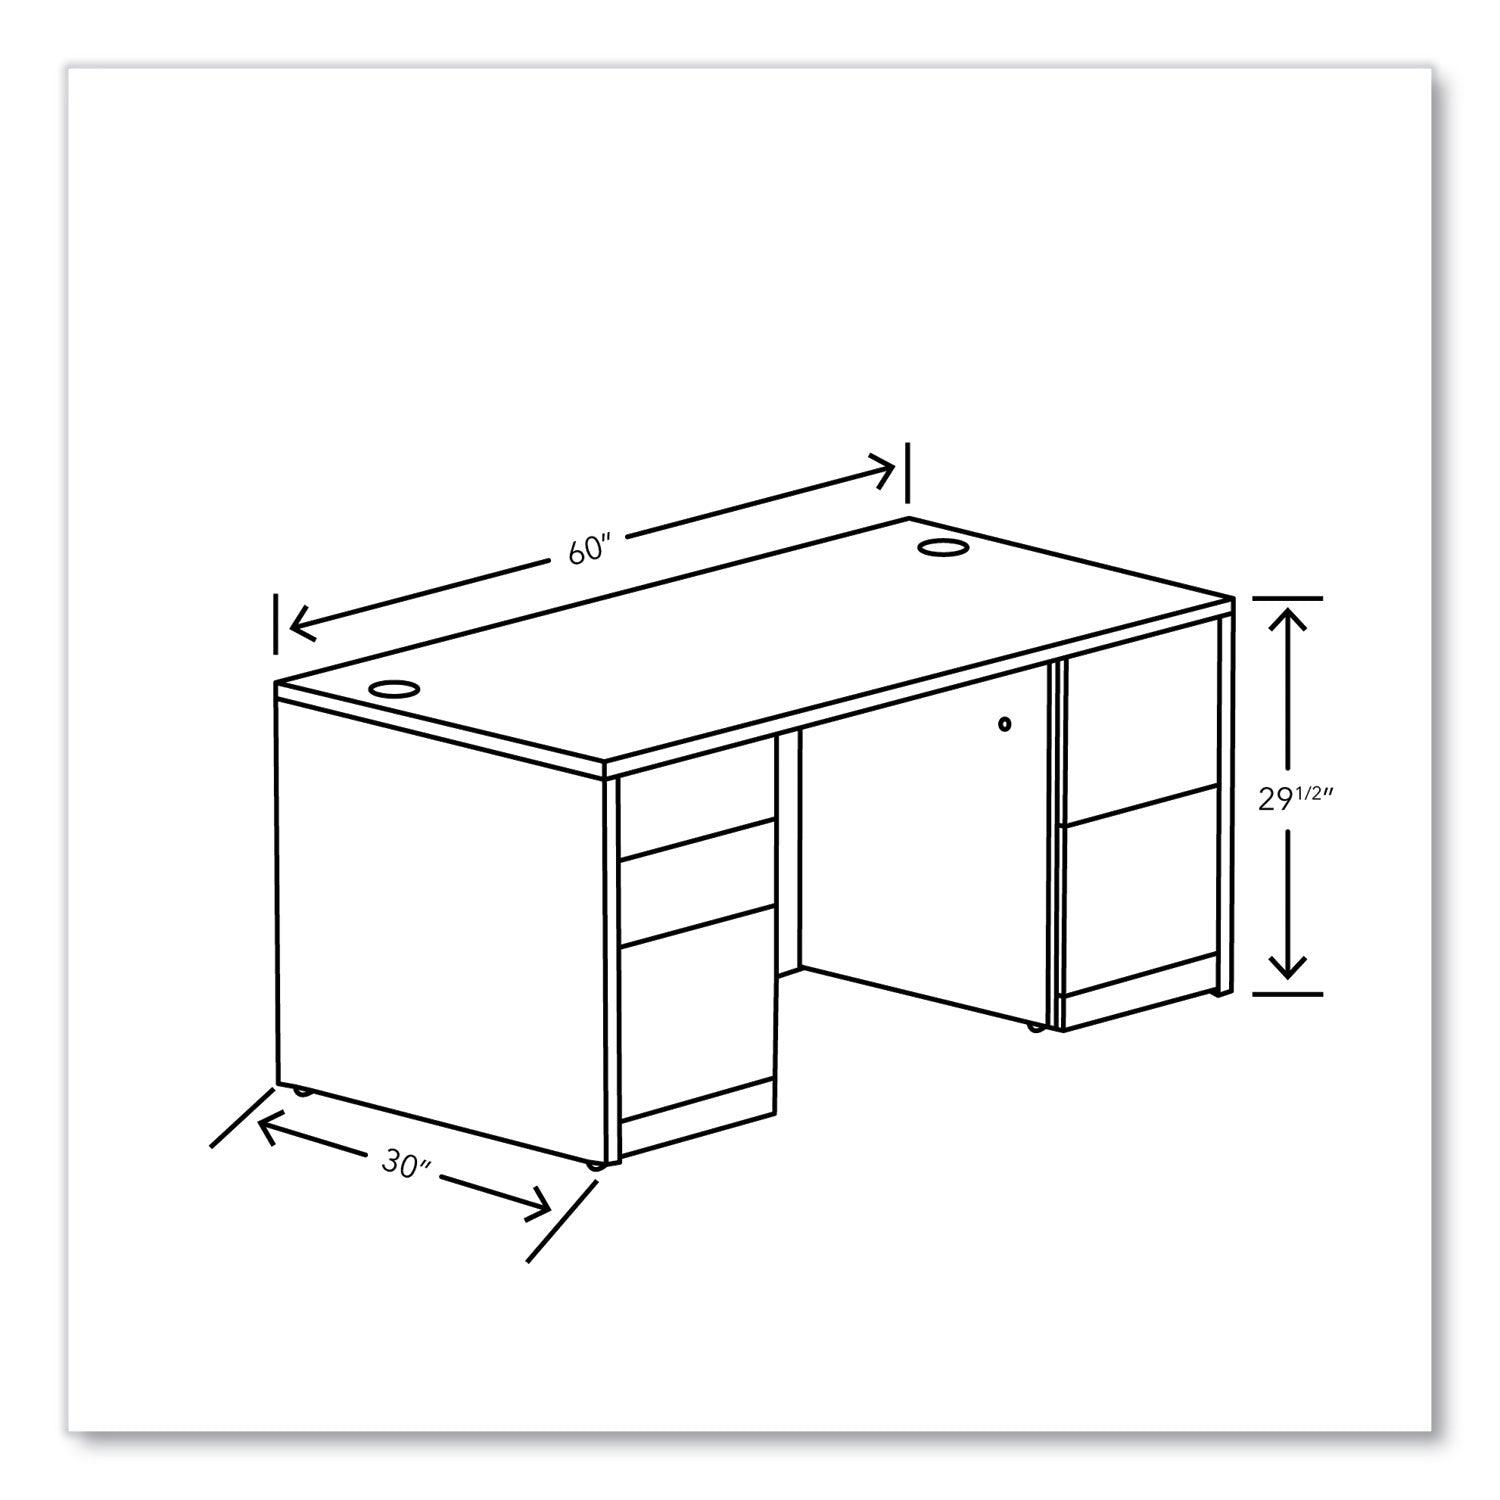 10500-series-double-pedestal-desk-with-full-pedestals-60-x-30-x-295-mahogany_hon105892nn - 2